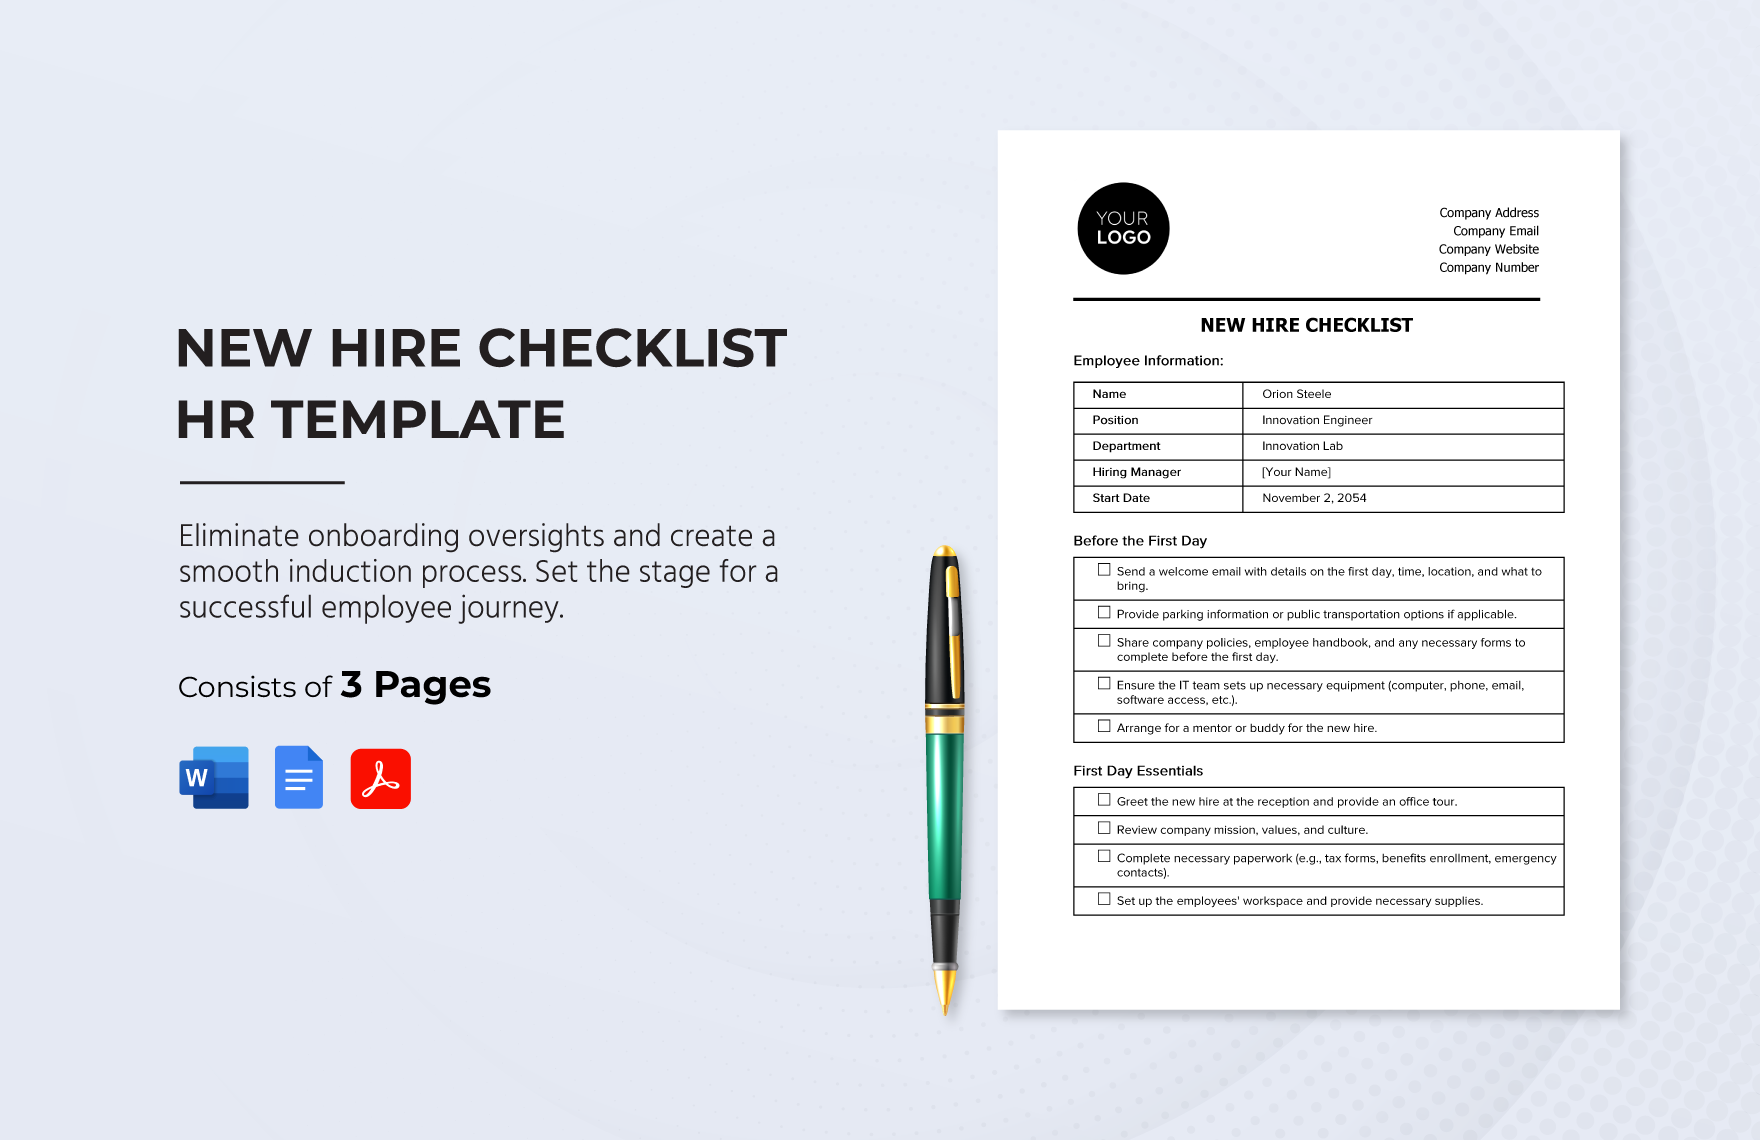 New Hire Checklist HR Template